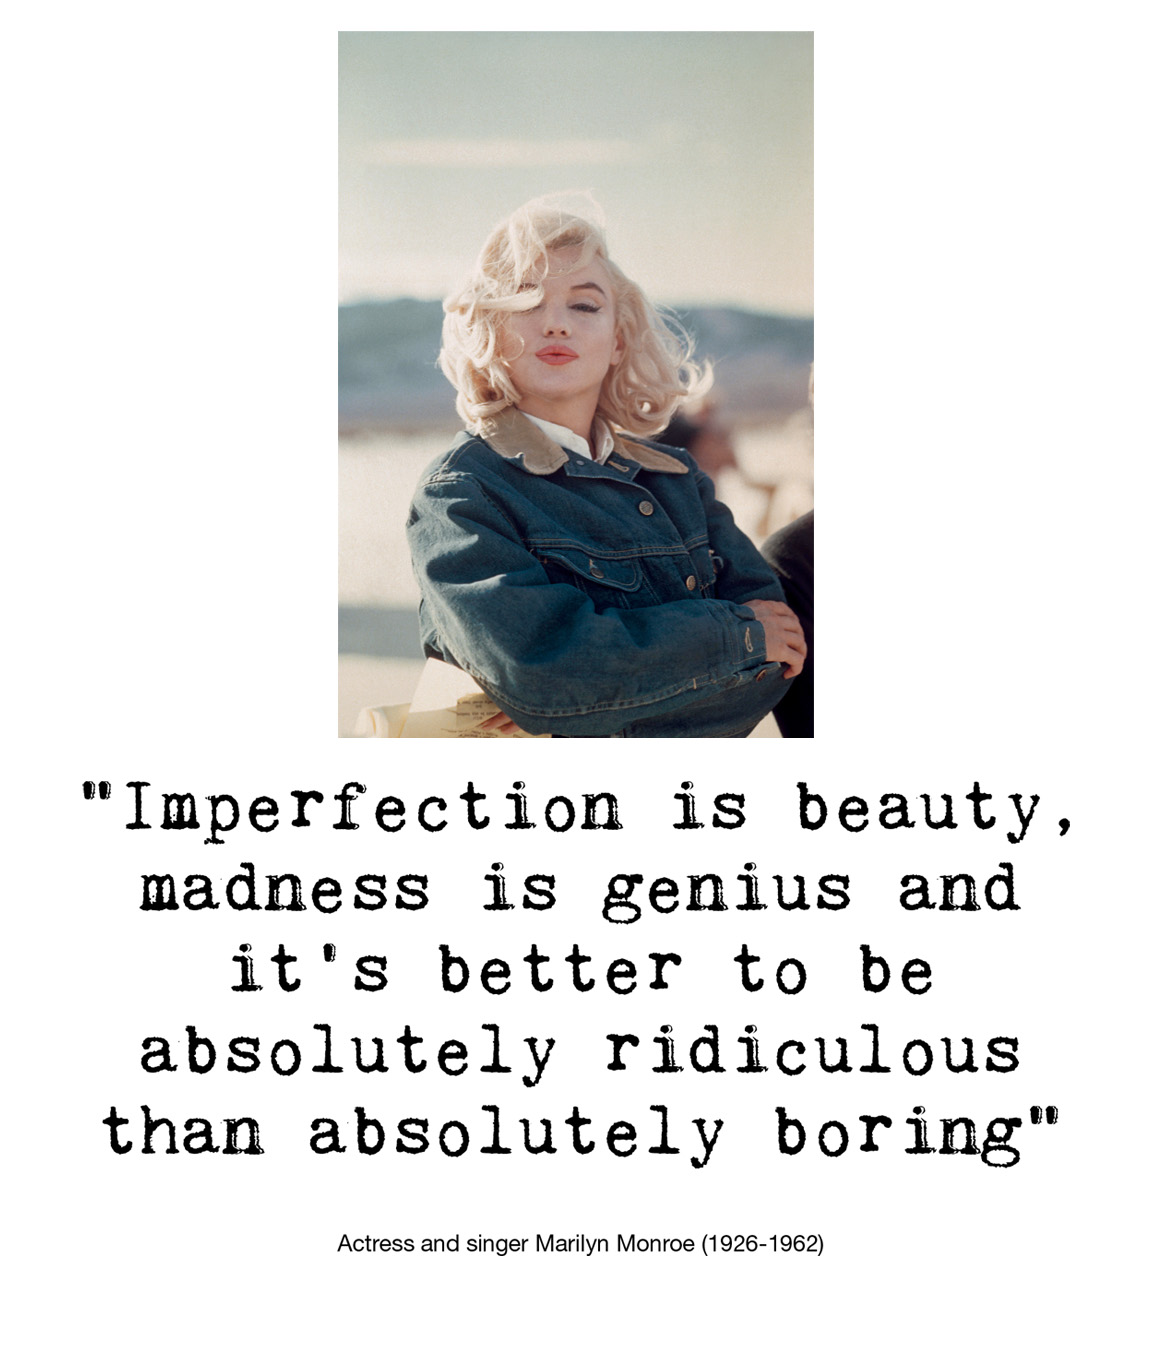 Print https://images.flowmagazine.nl/wp-content/uploads/sites/2/2019/03/10112628/Quote-Marilyn-Monroe.jpg